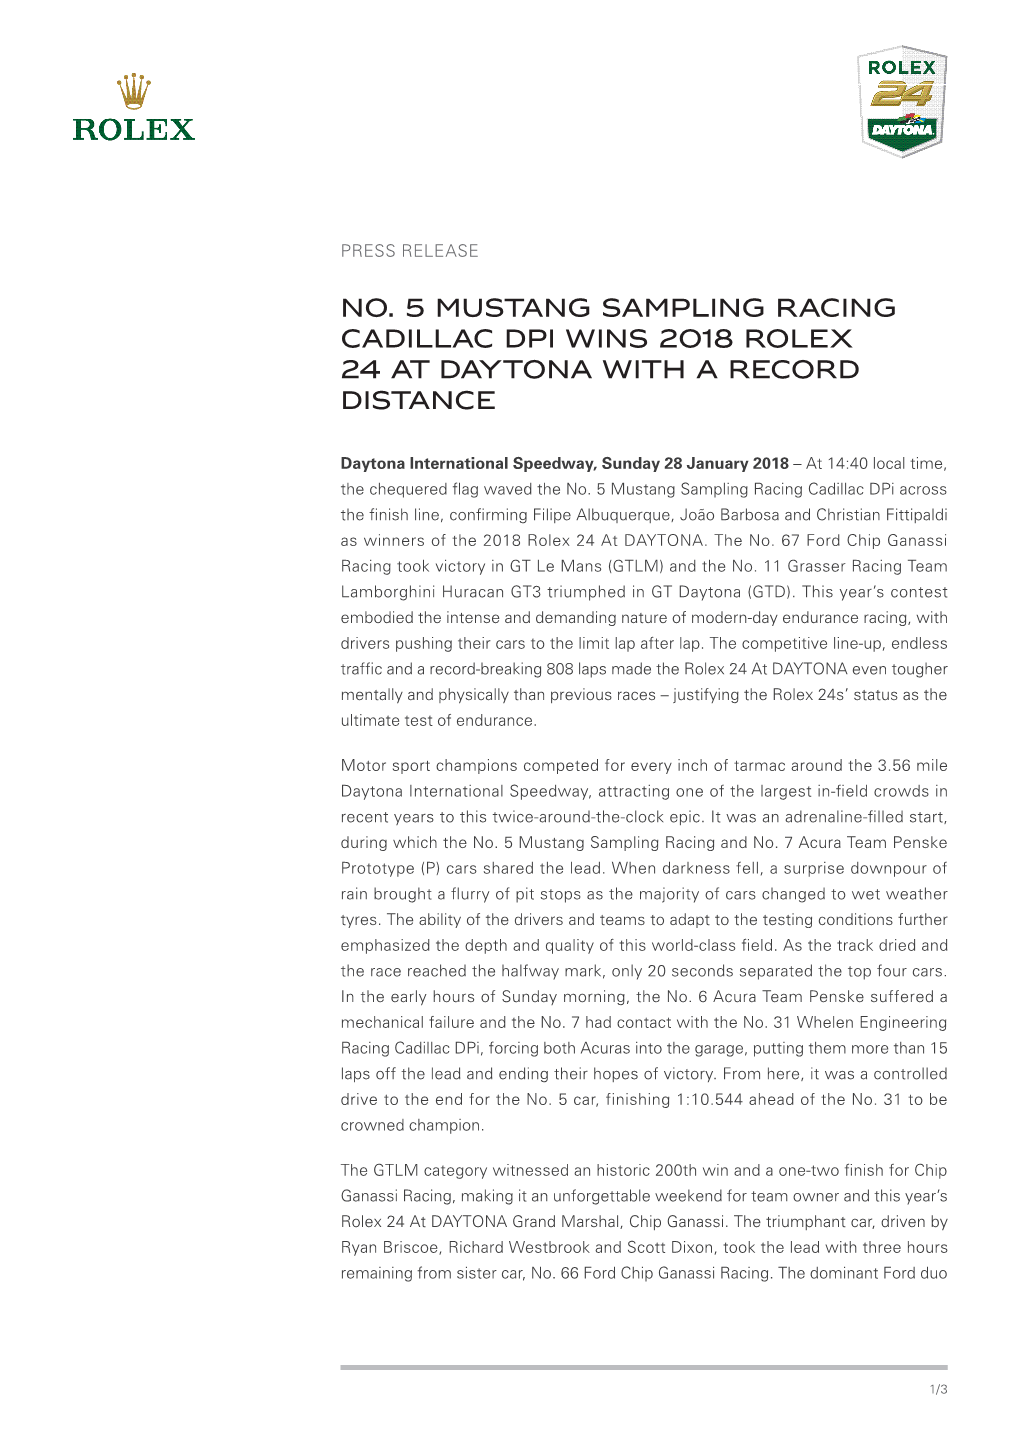 No. 5 Mustang Sampling Racing Cadillac Dpi Wins 2018 Rolex 24 at Daytona with a Record Distance